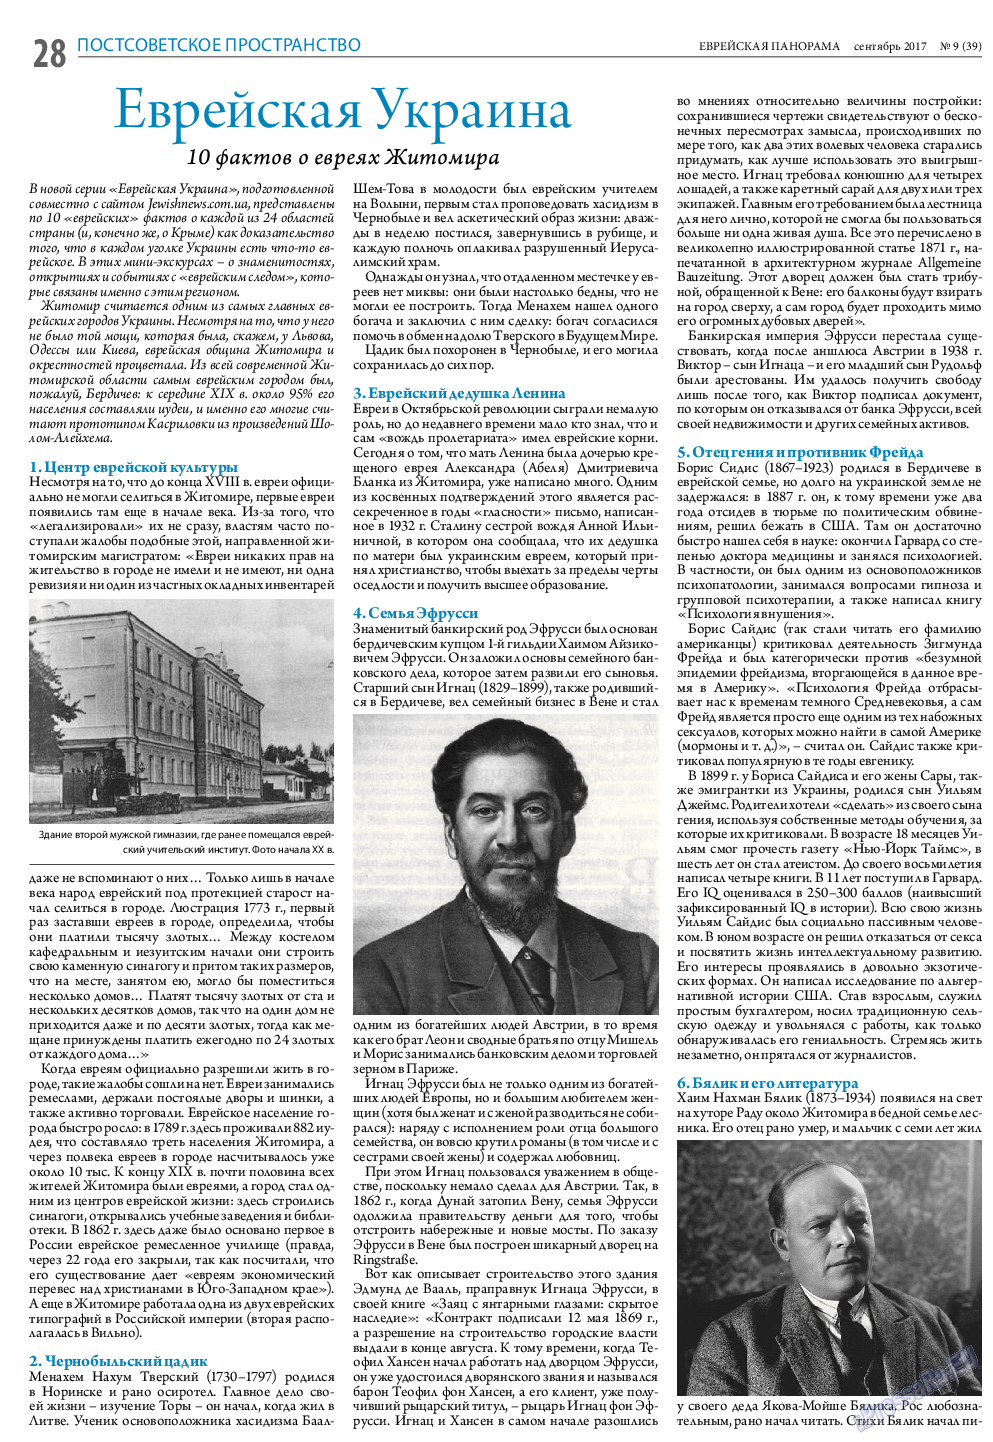 Еврейская панорама, газета. 2017 №9 стр.28